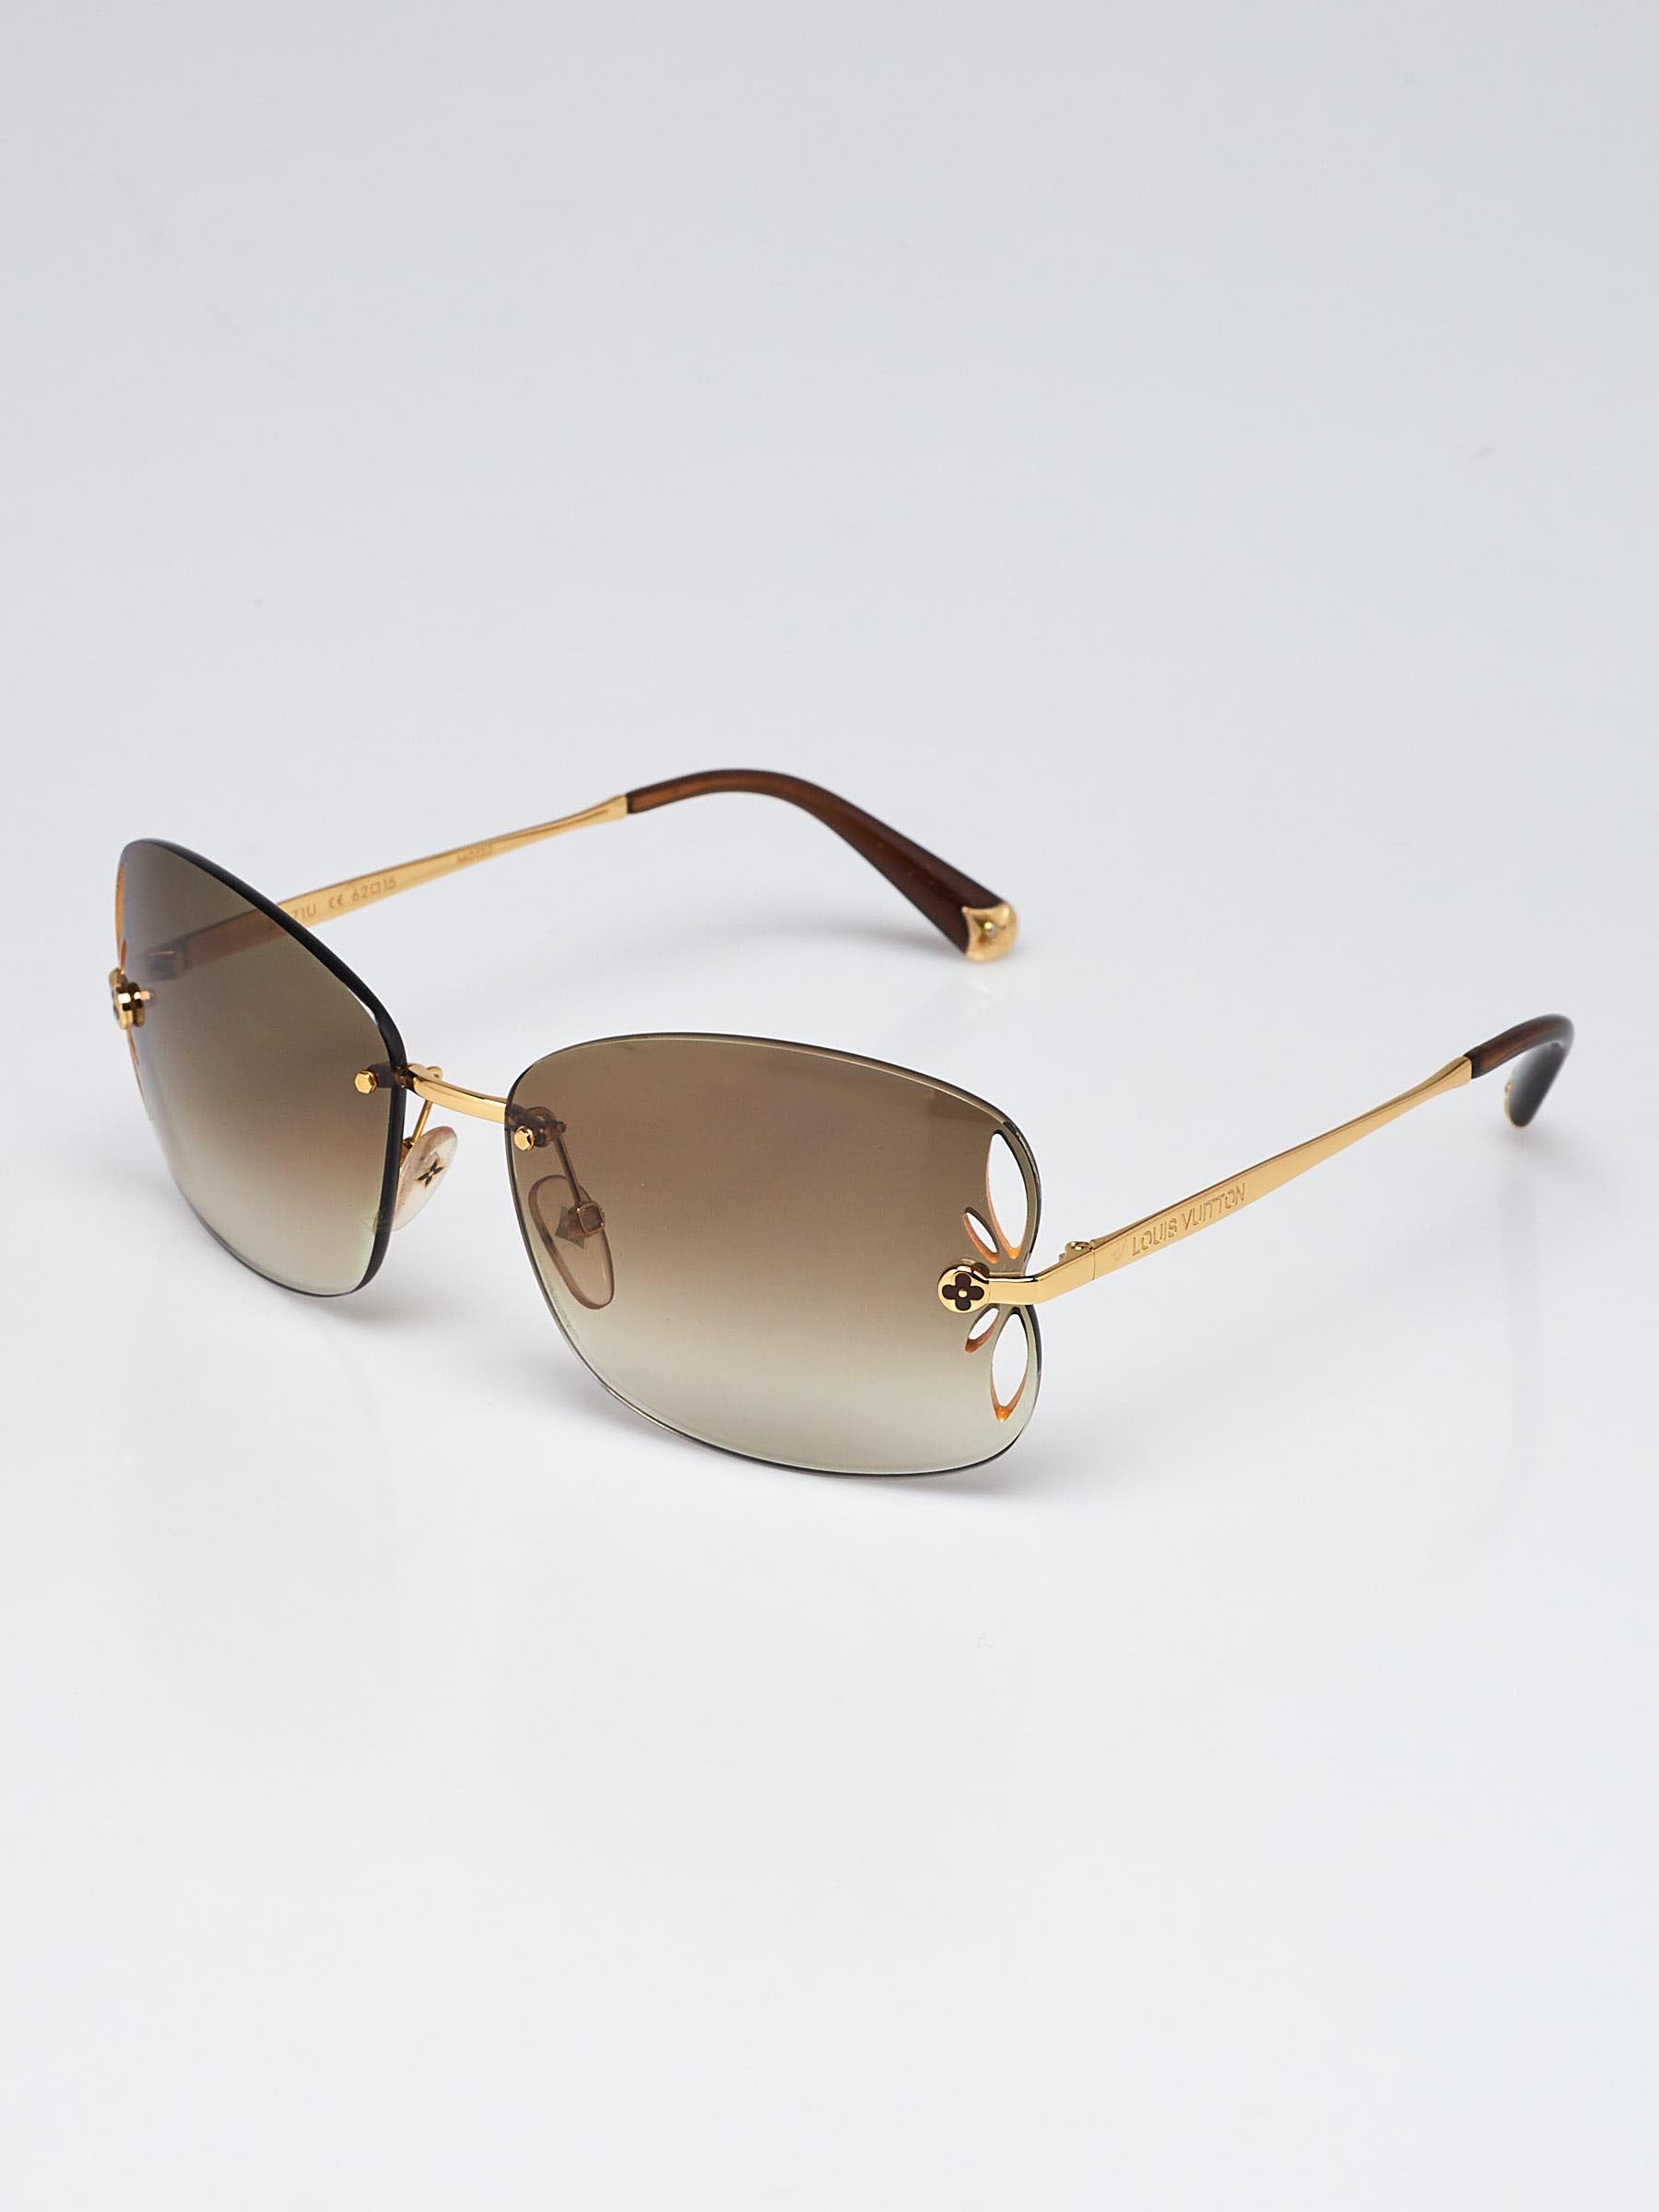 Genuine Louis Vuitton LV Sunglasses Gift Box